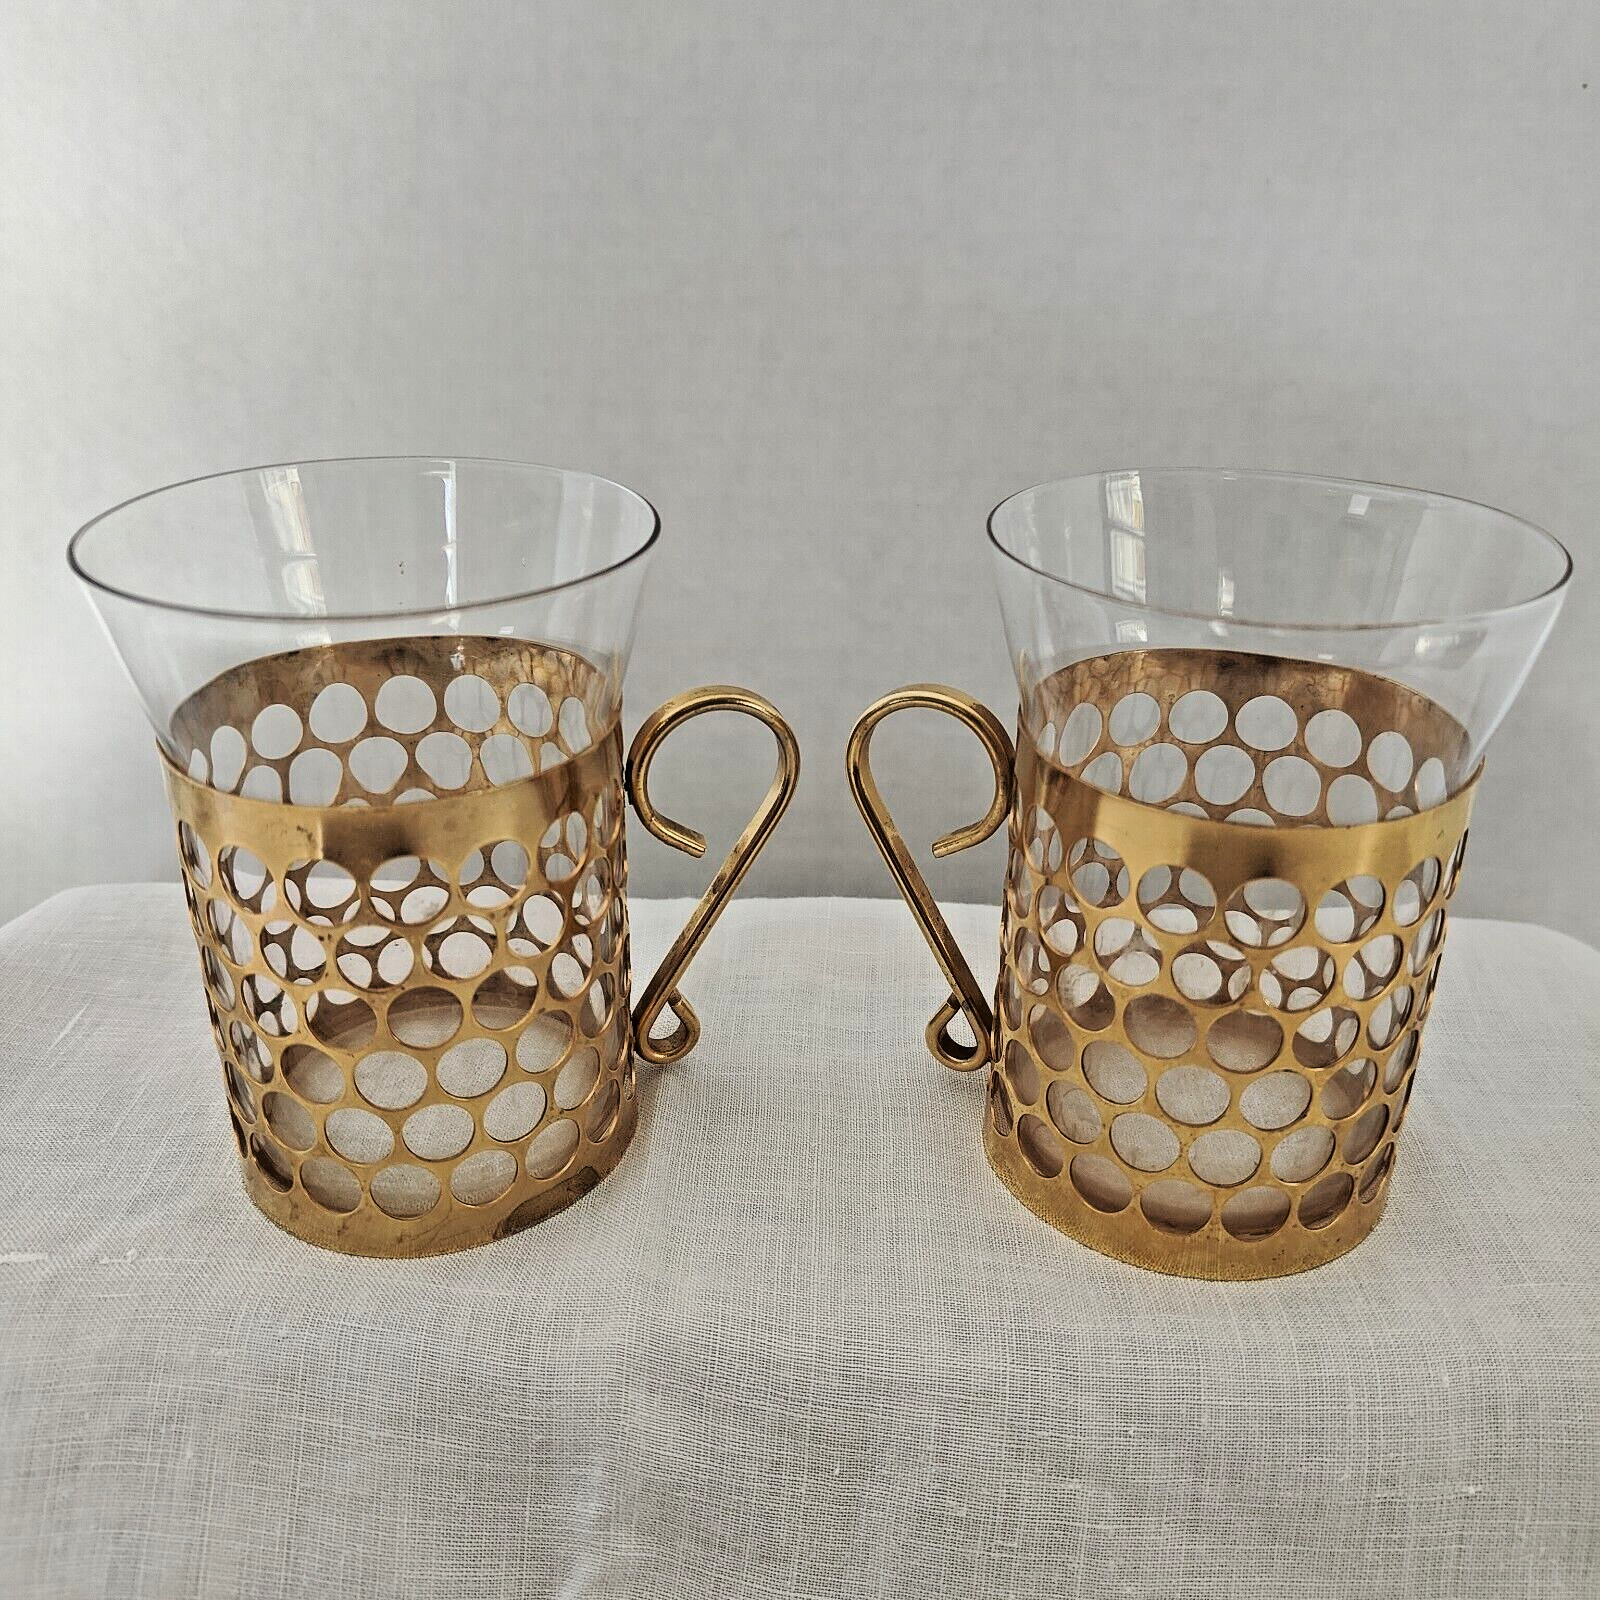 2 Royal Krona Sweden IRISH COFFEE Expresso Cups Mugs Gold Tone Metal & Glass